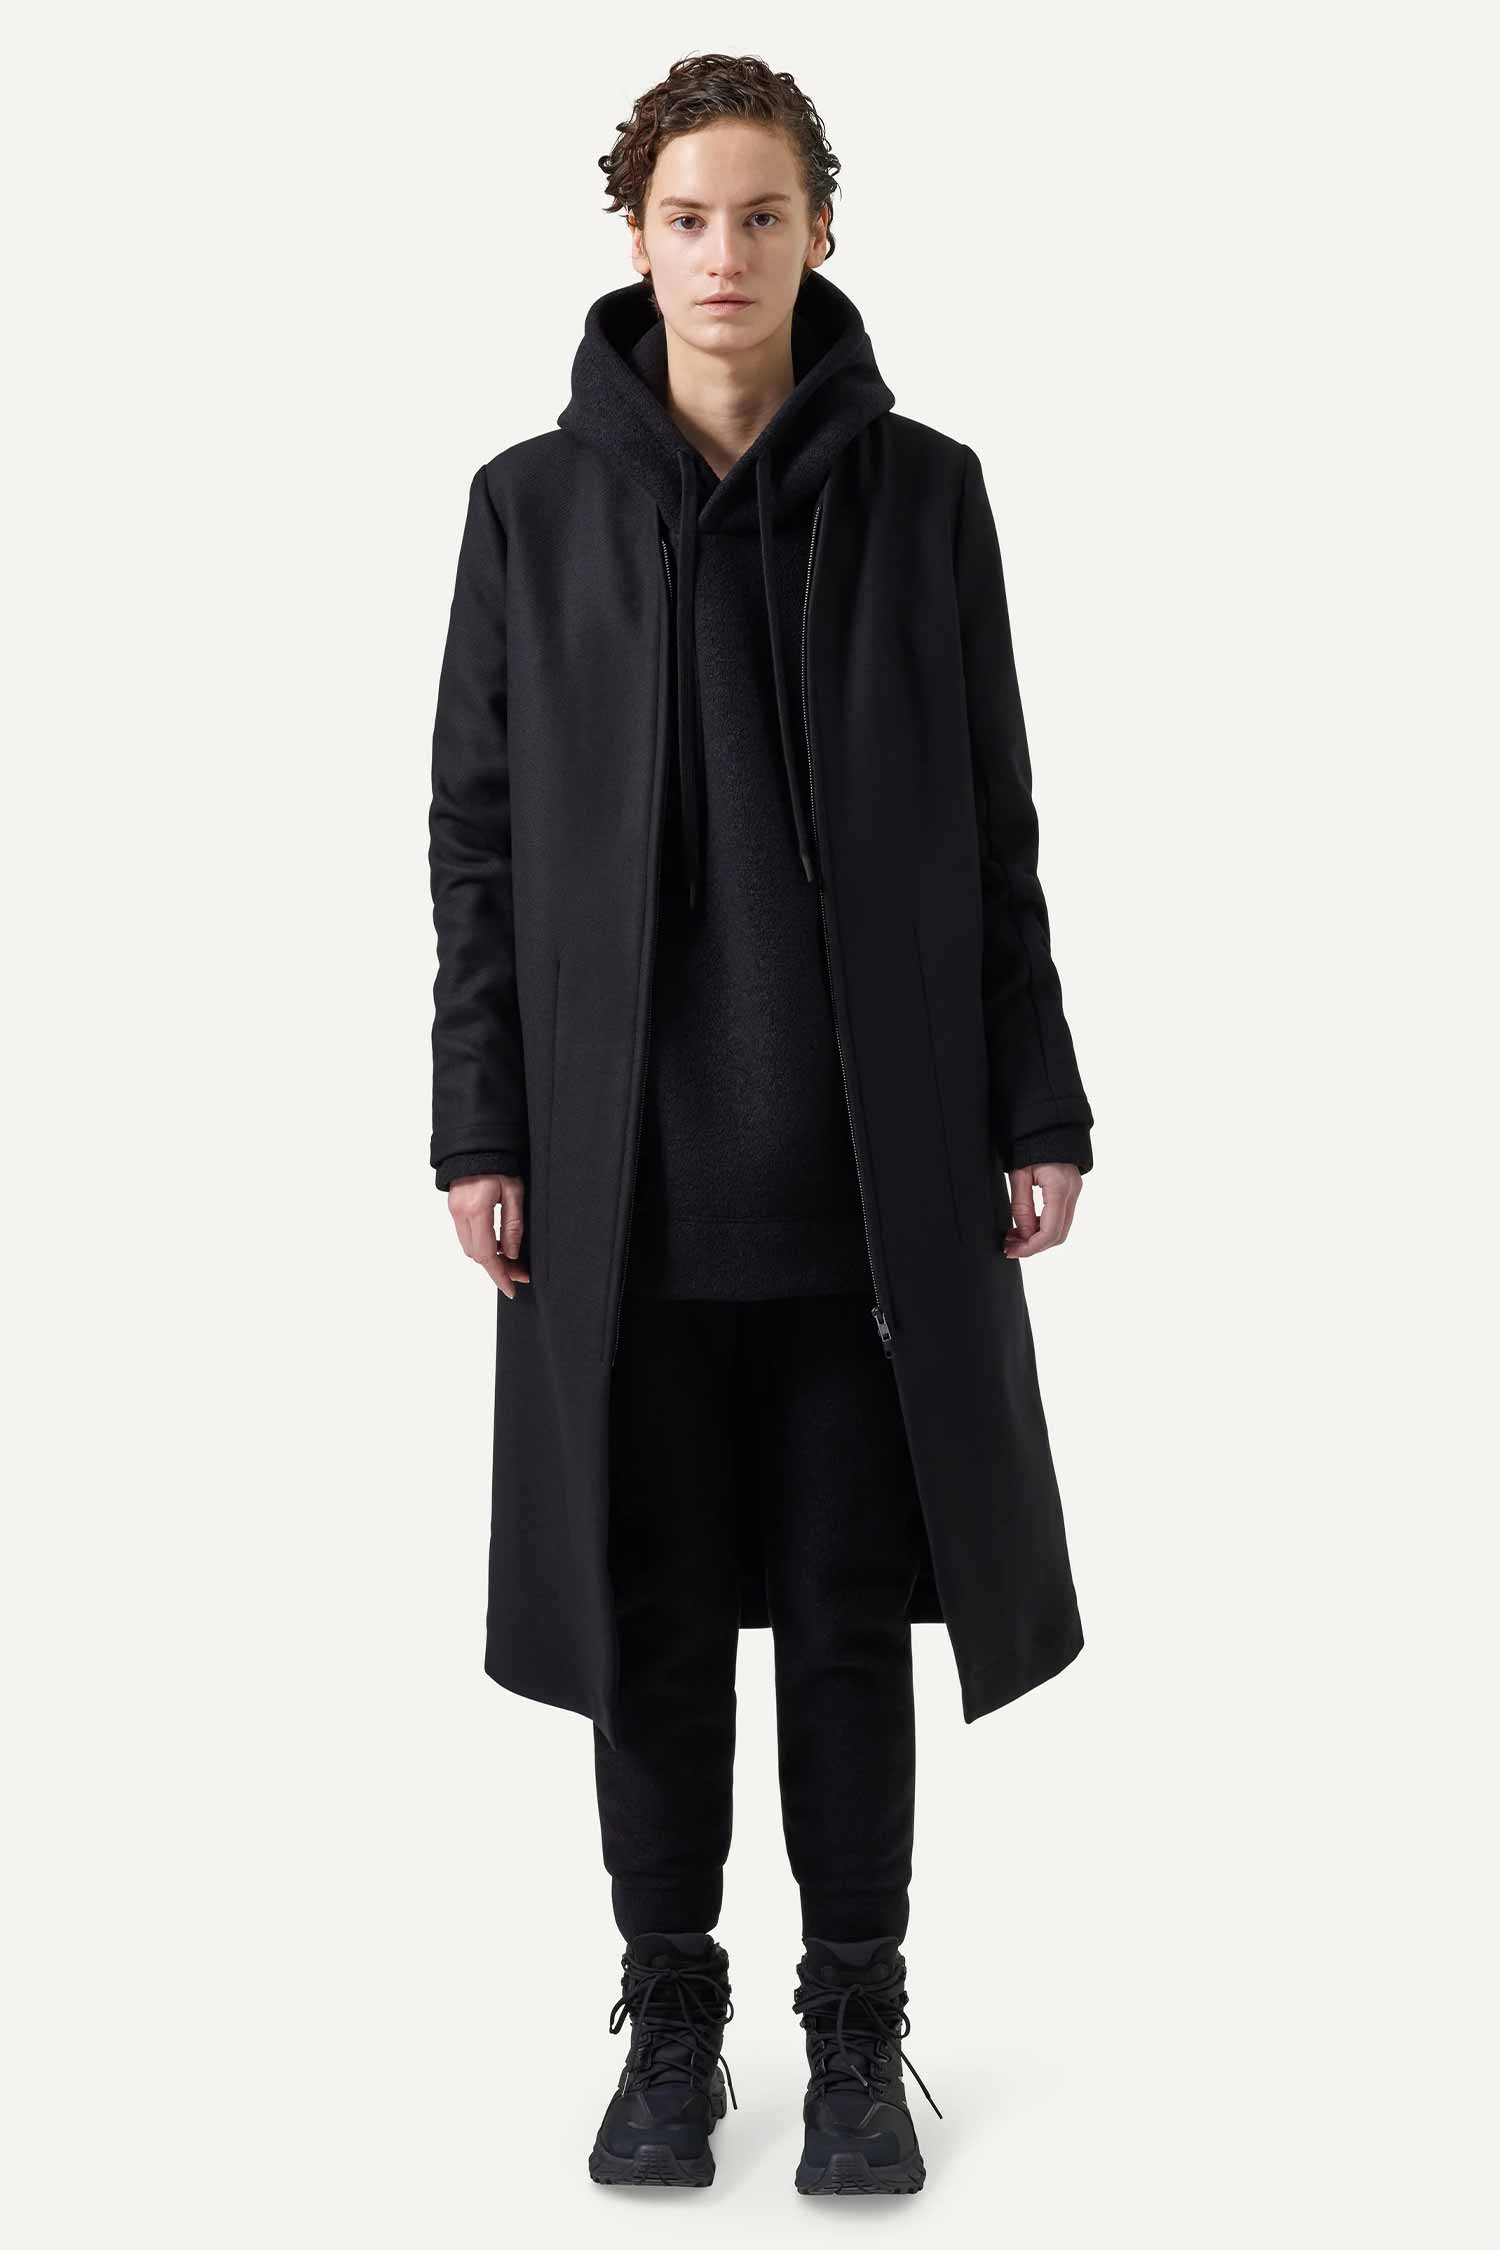 Buy KOTTY Women's Black Full Sleeve Solid Denim Jacket online